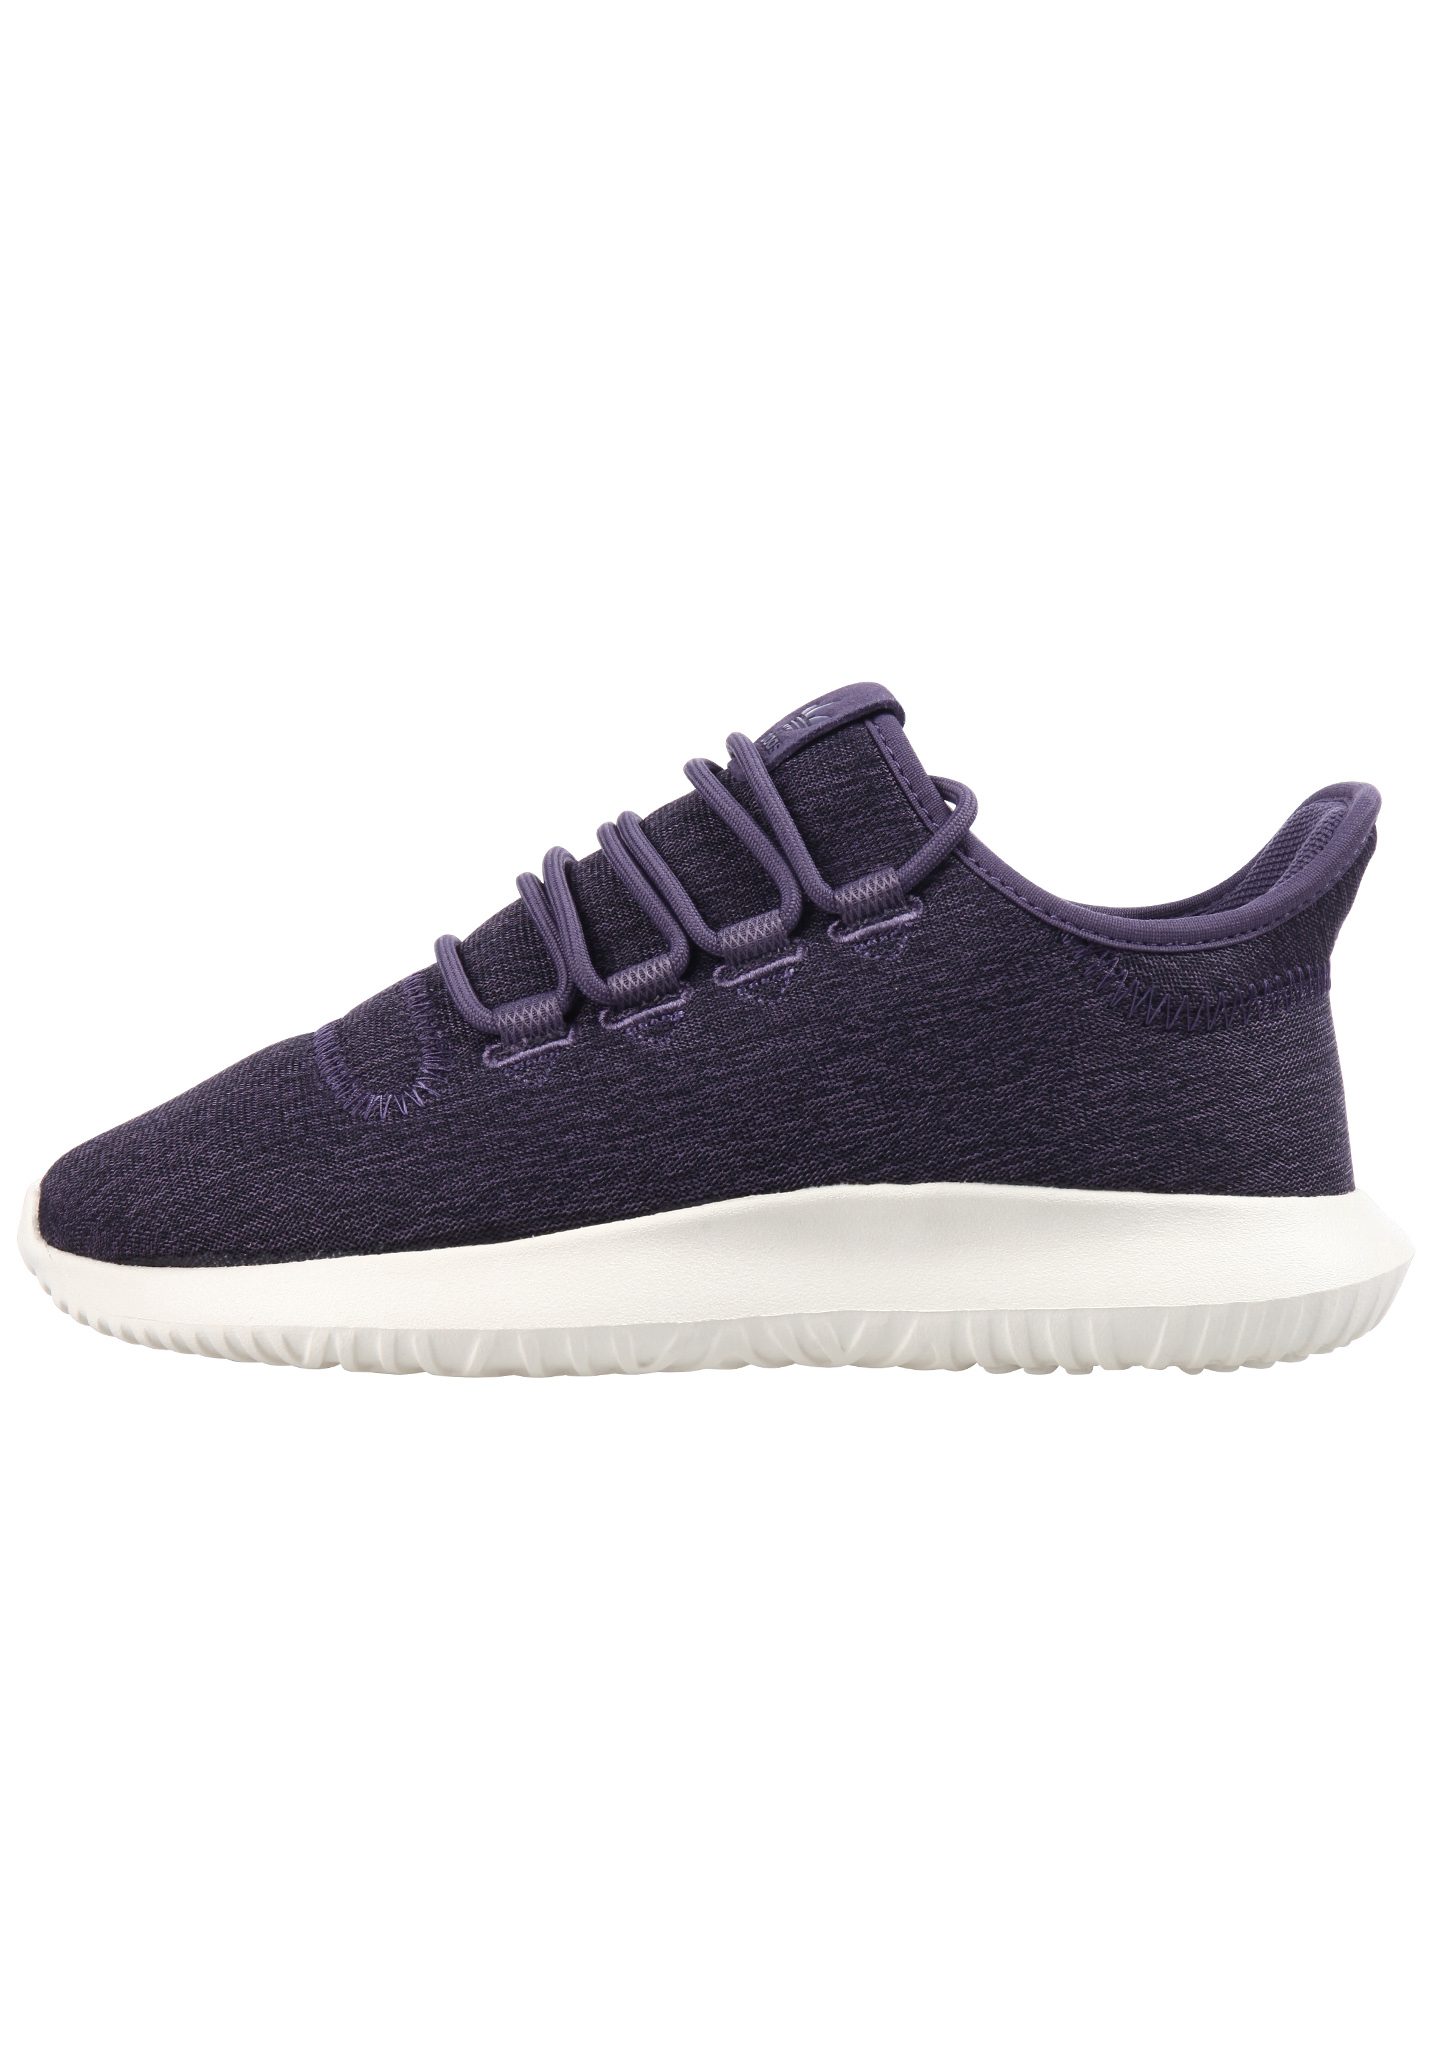 Adidas Originals Tubular Shadow Sneaker Low trace purple /trace purple /off white 41 1/3